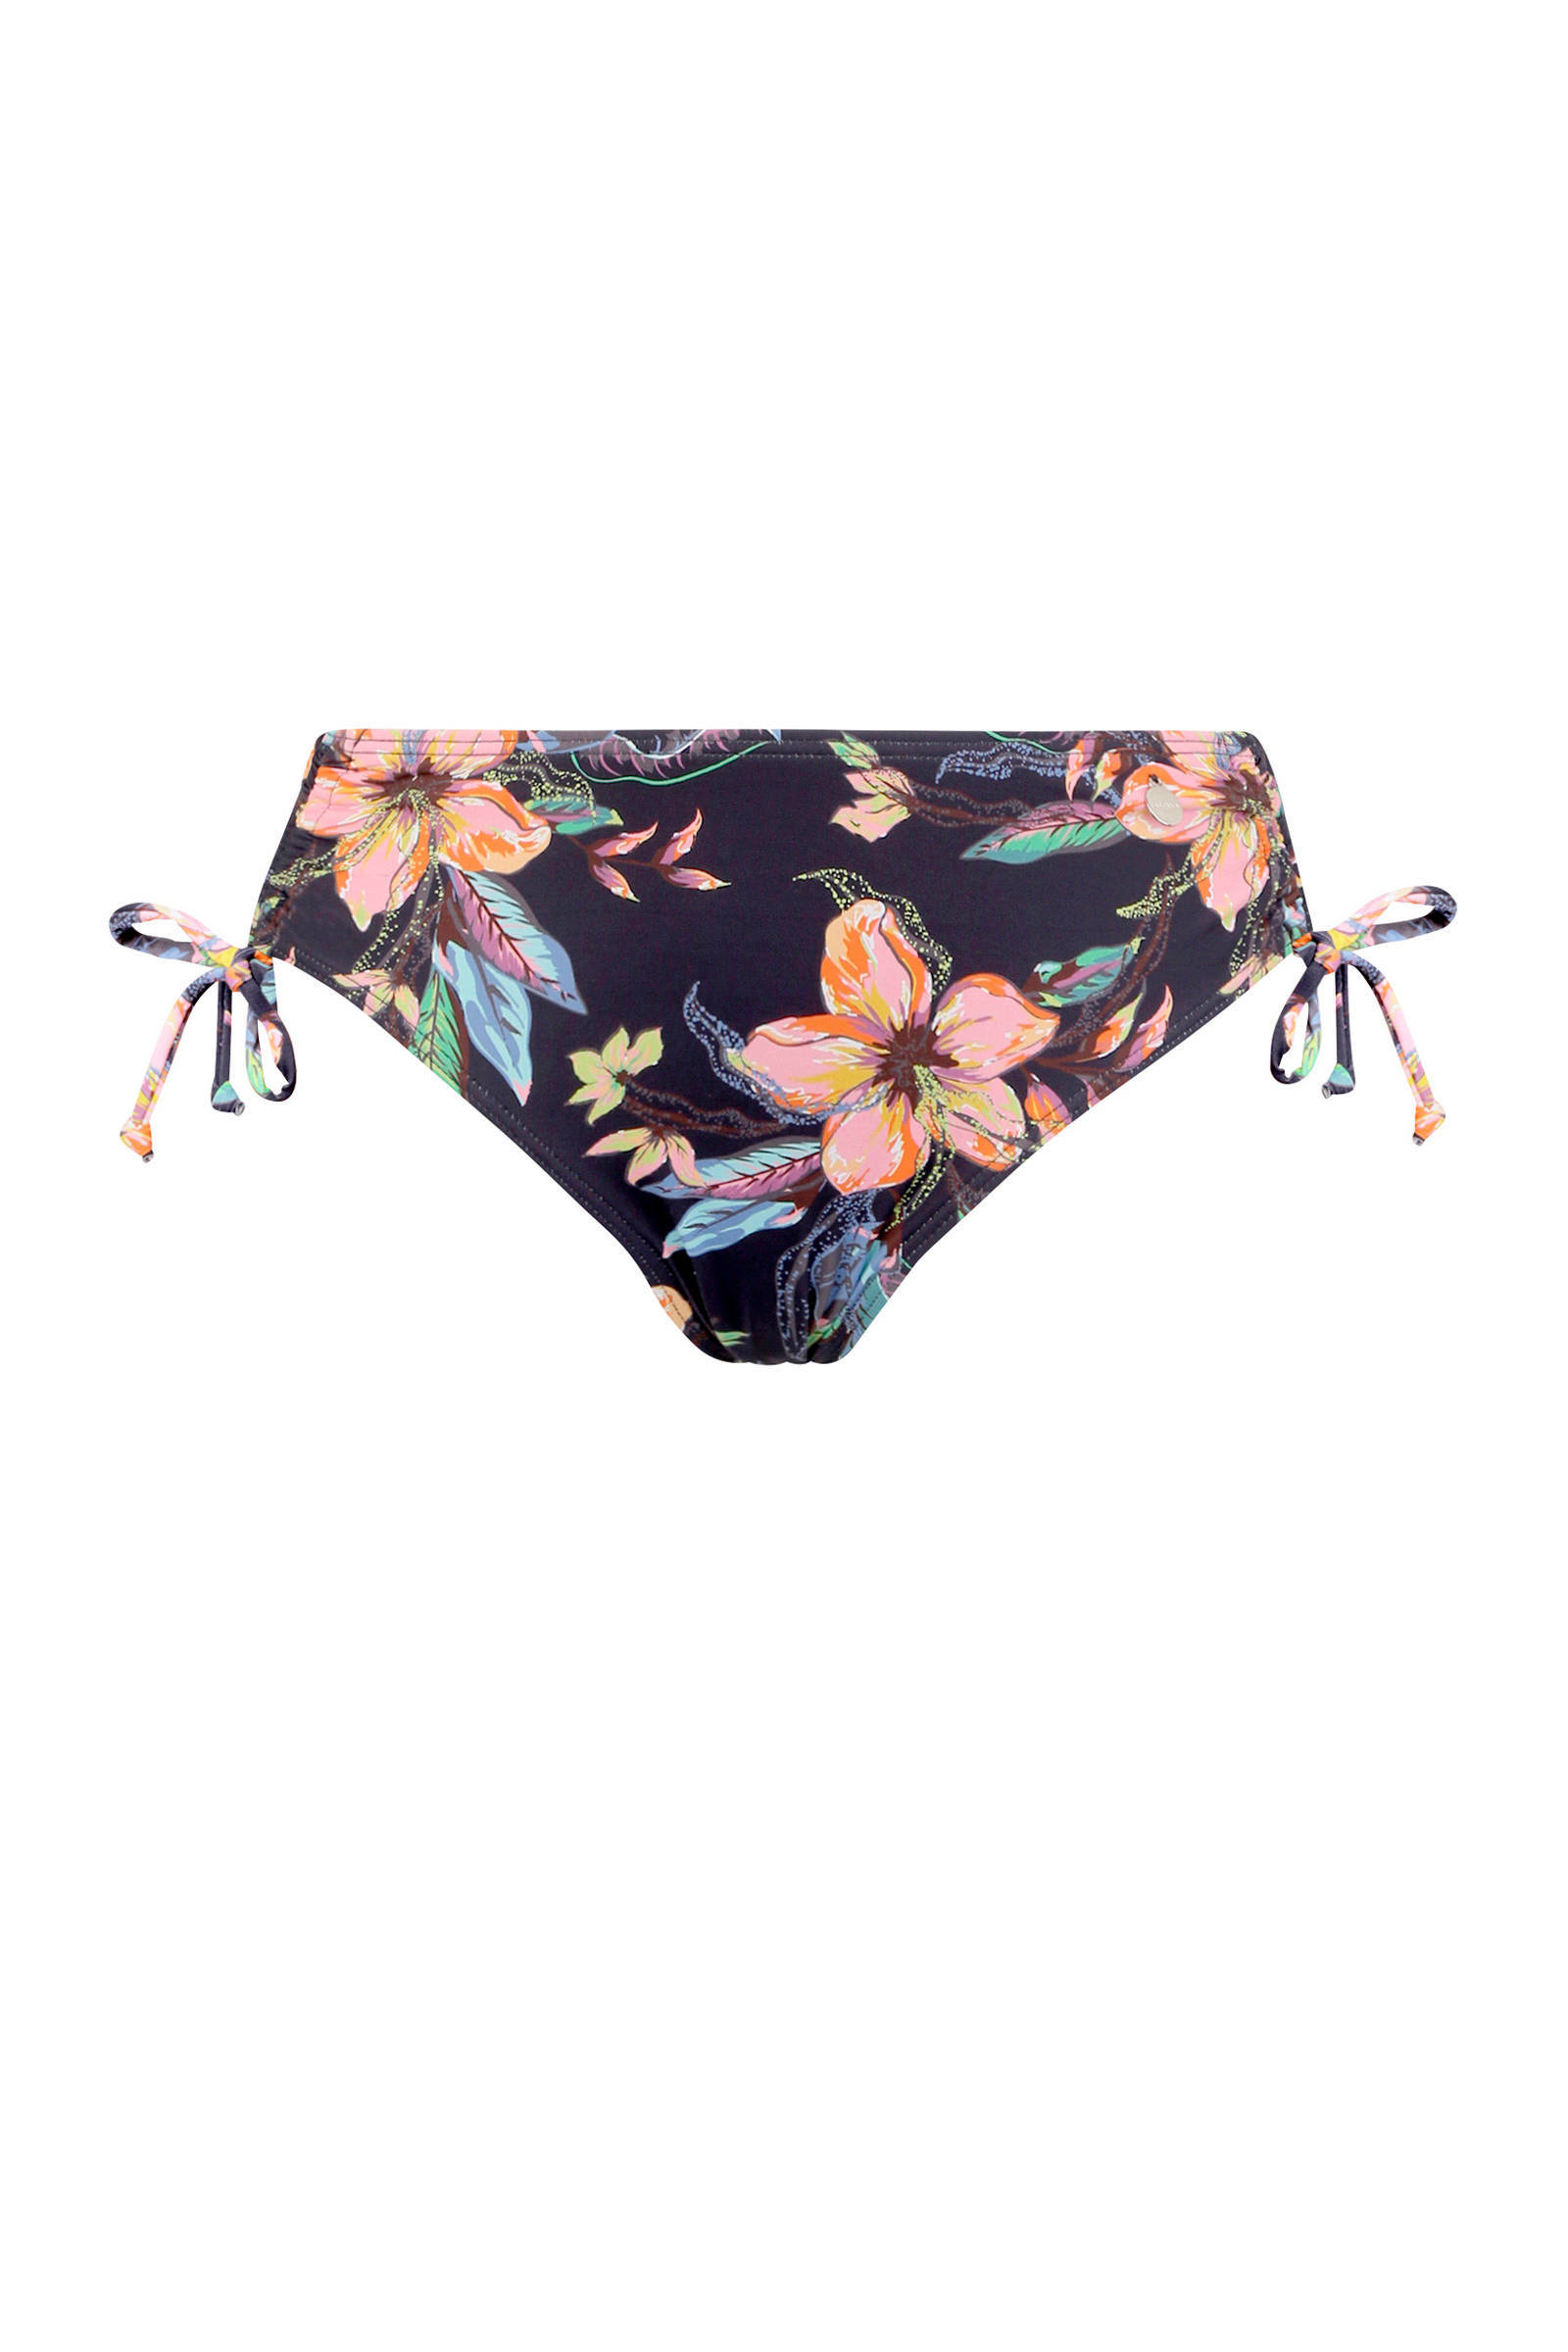 Lascana bikinibroekje met all over print donkergrijs/blauw/roze online kopen